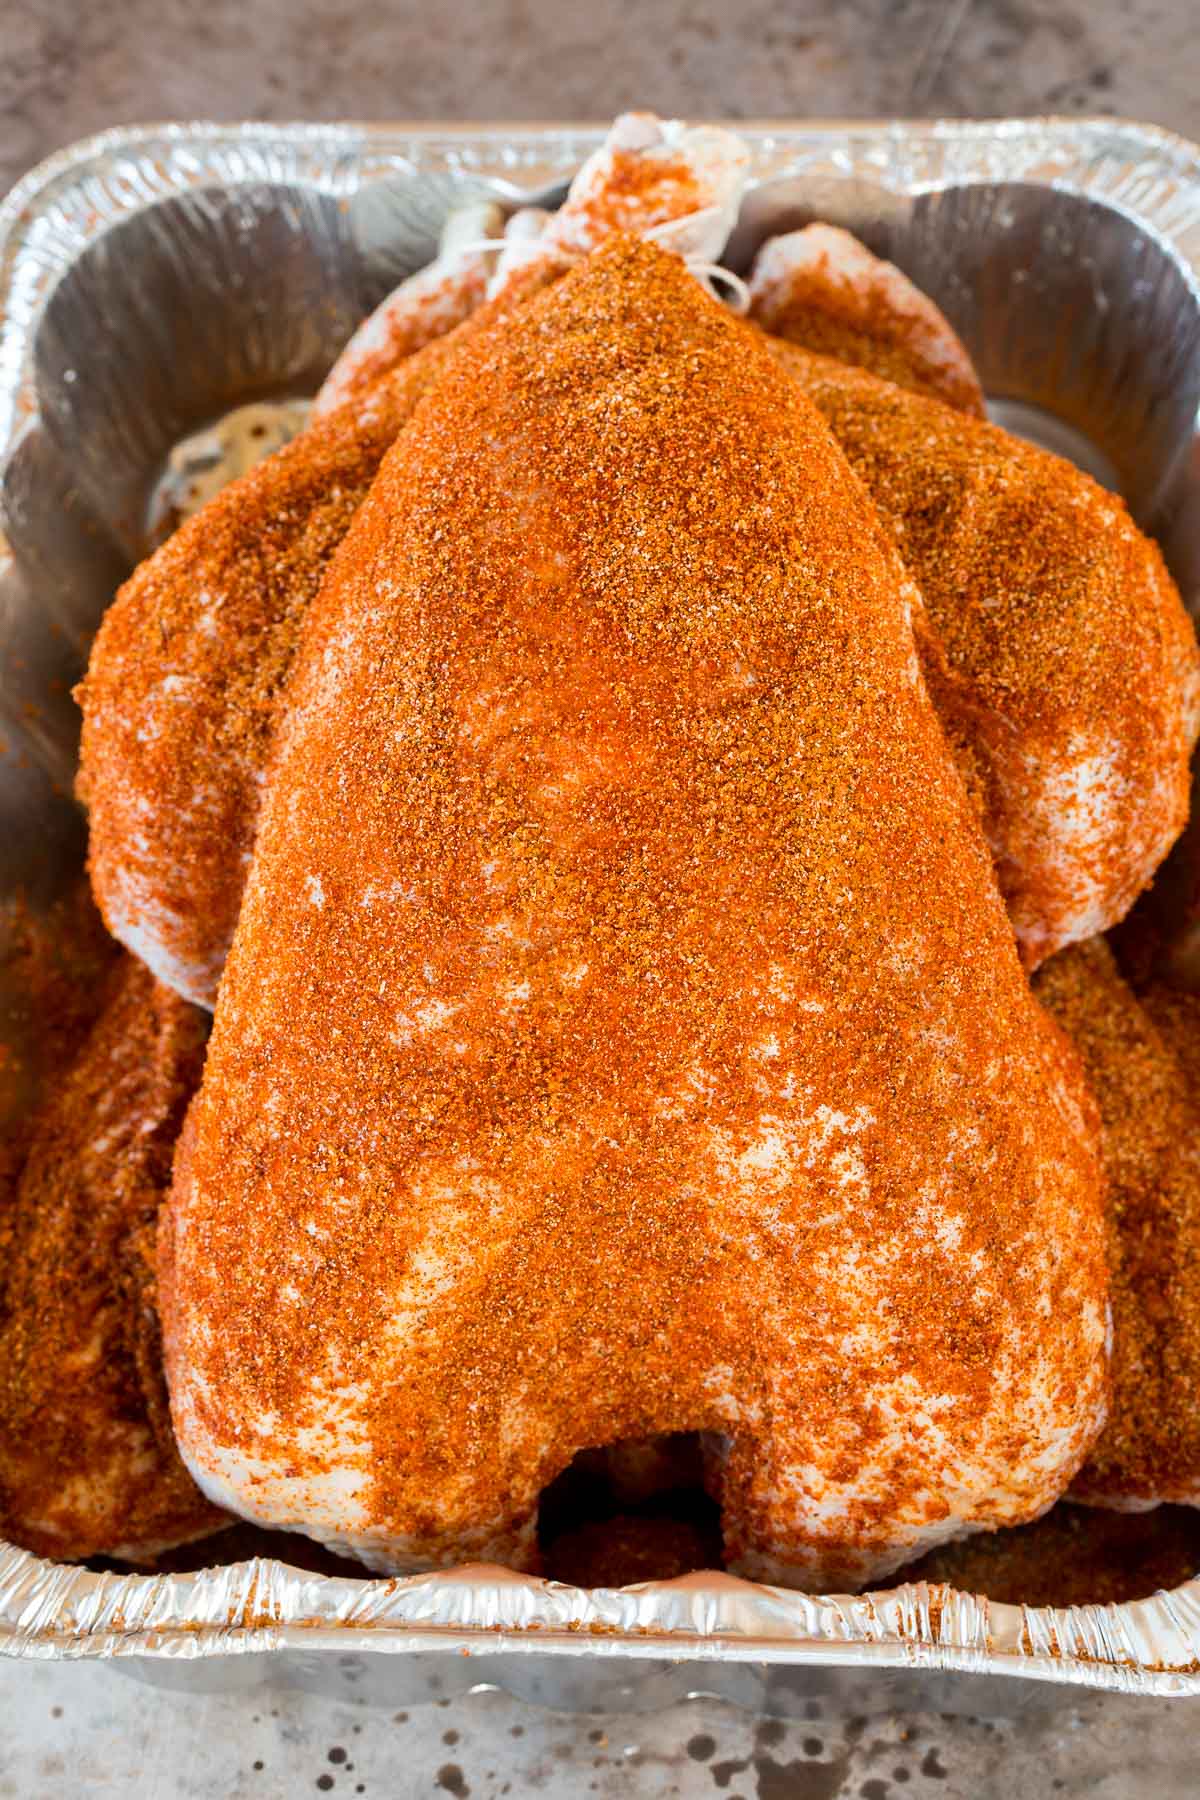 A raw turkey coated in seasoning in a pan.